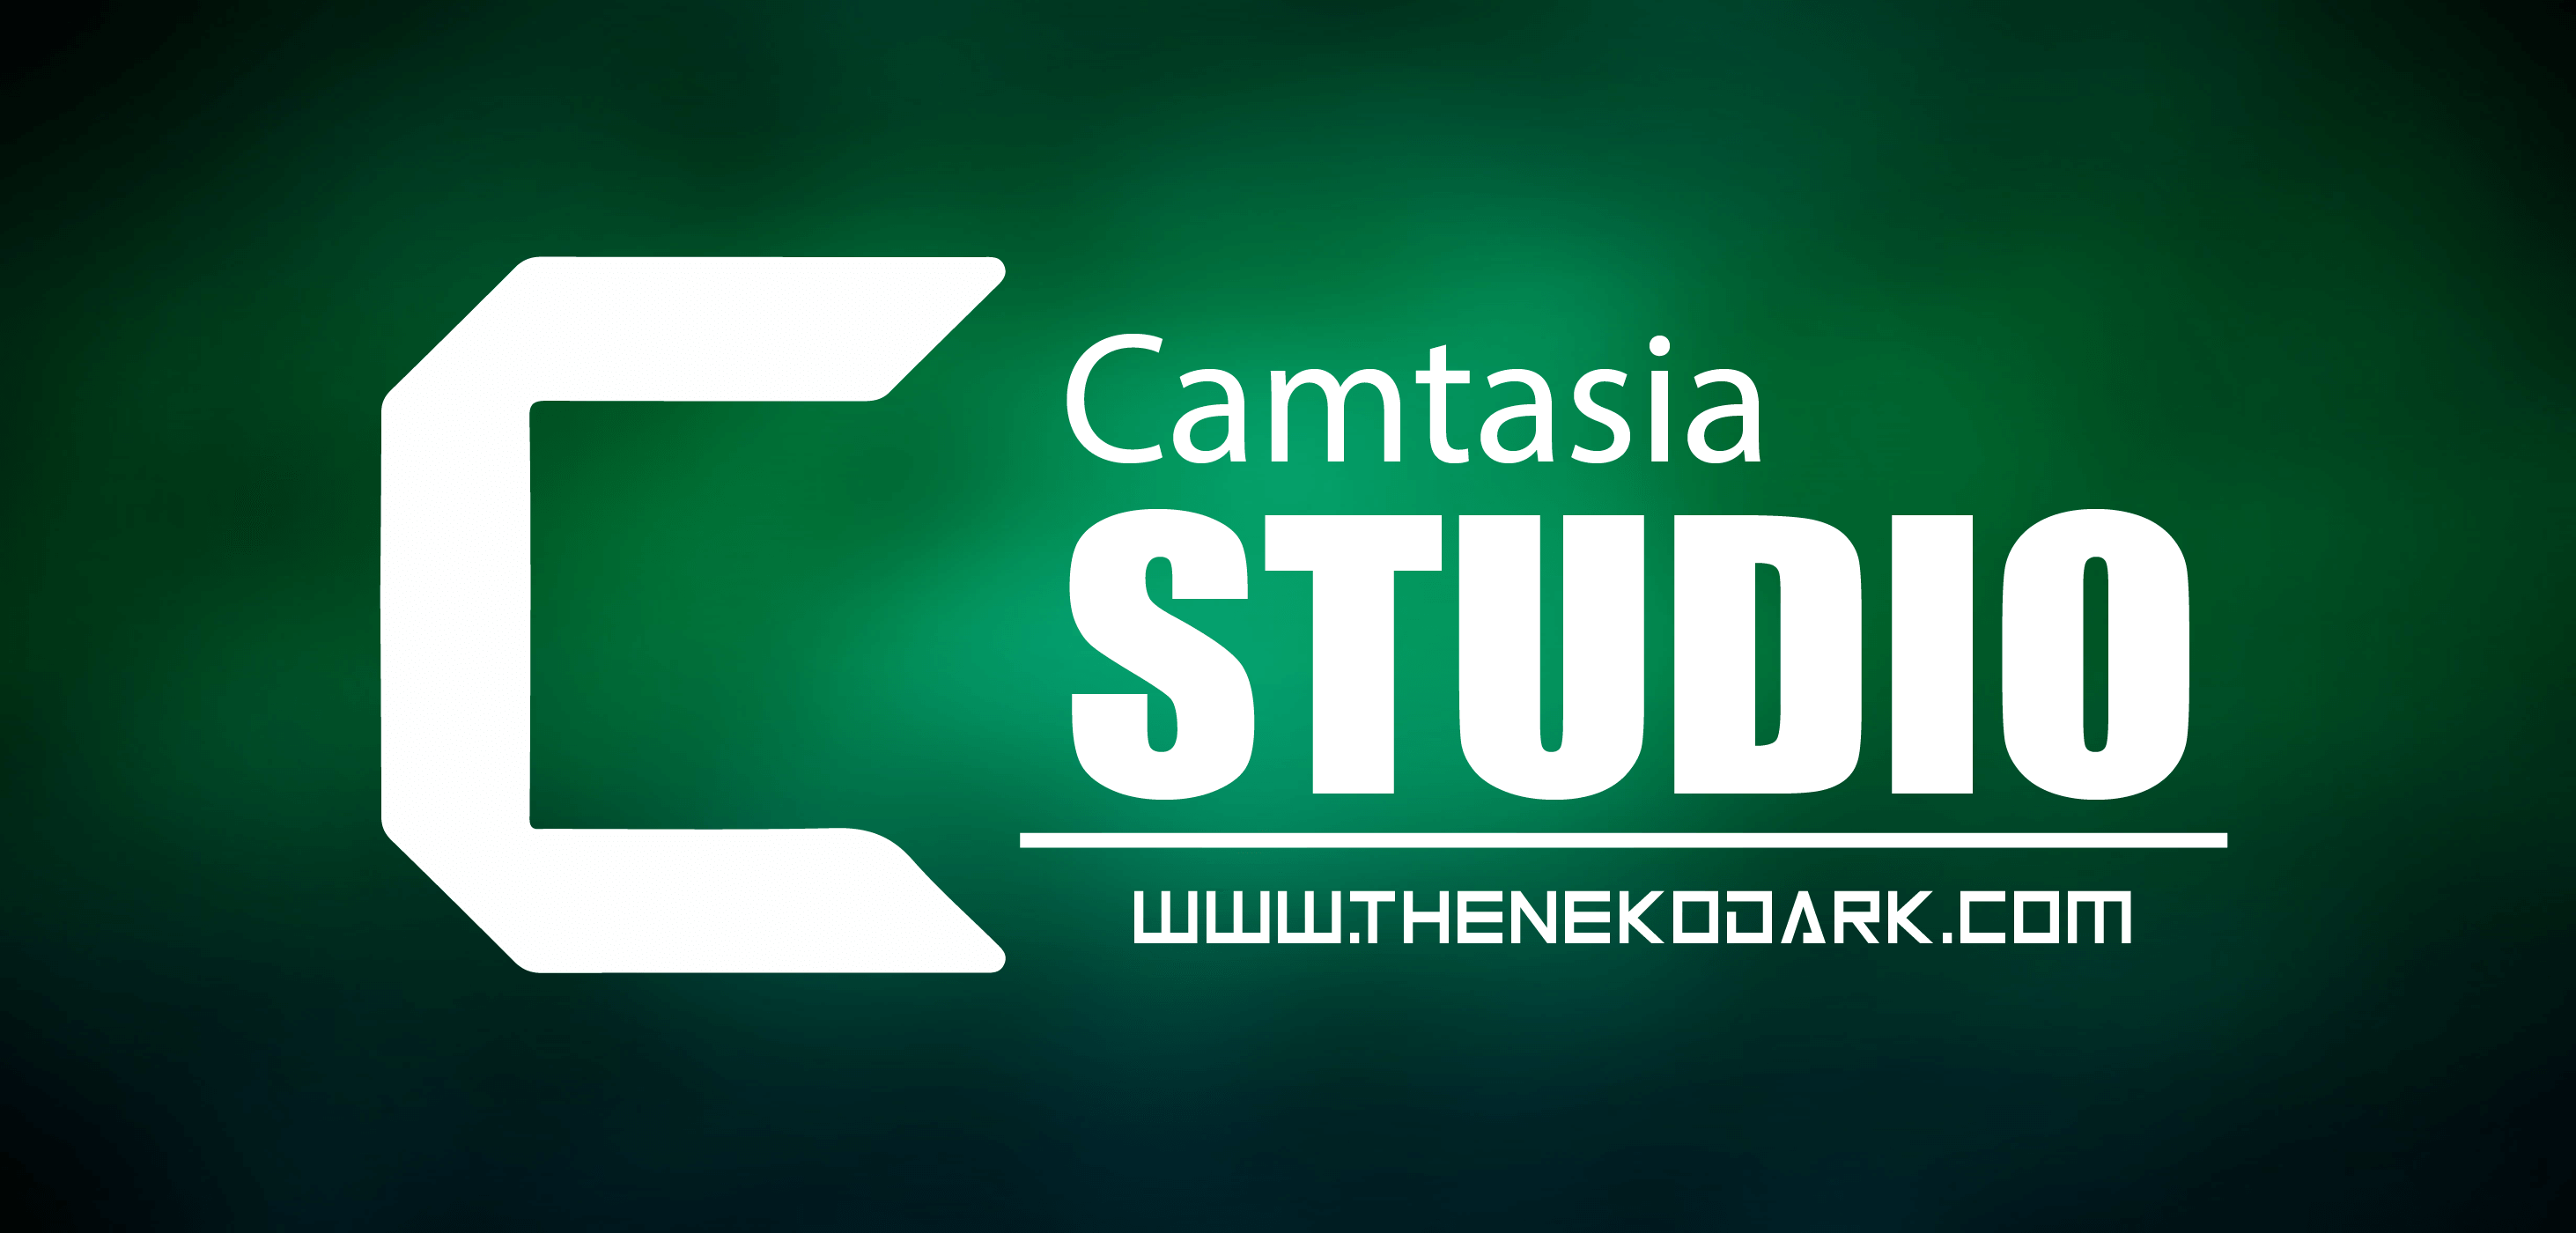 Camtasia Studio 5.0 Keygen (Espanol) [.com.ar] Full Version